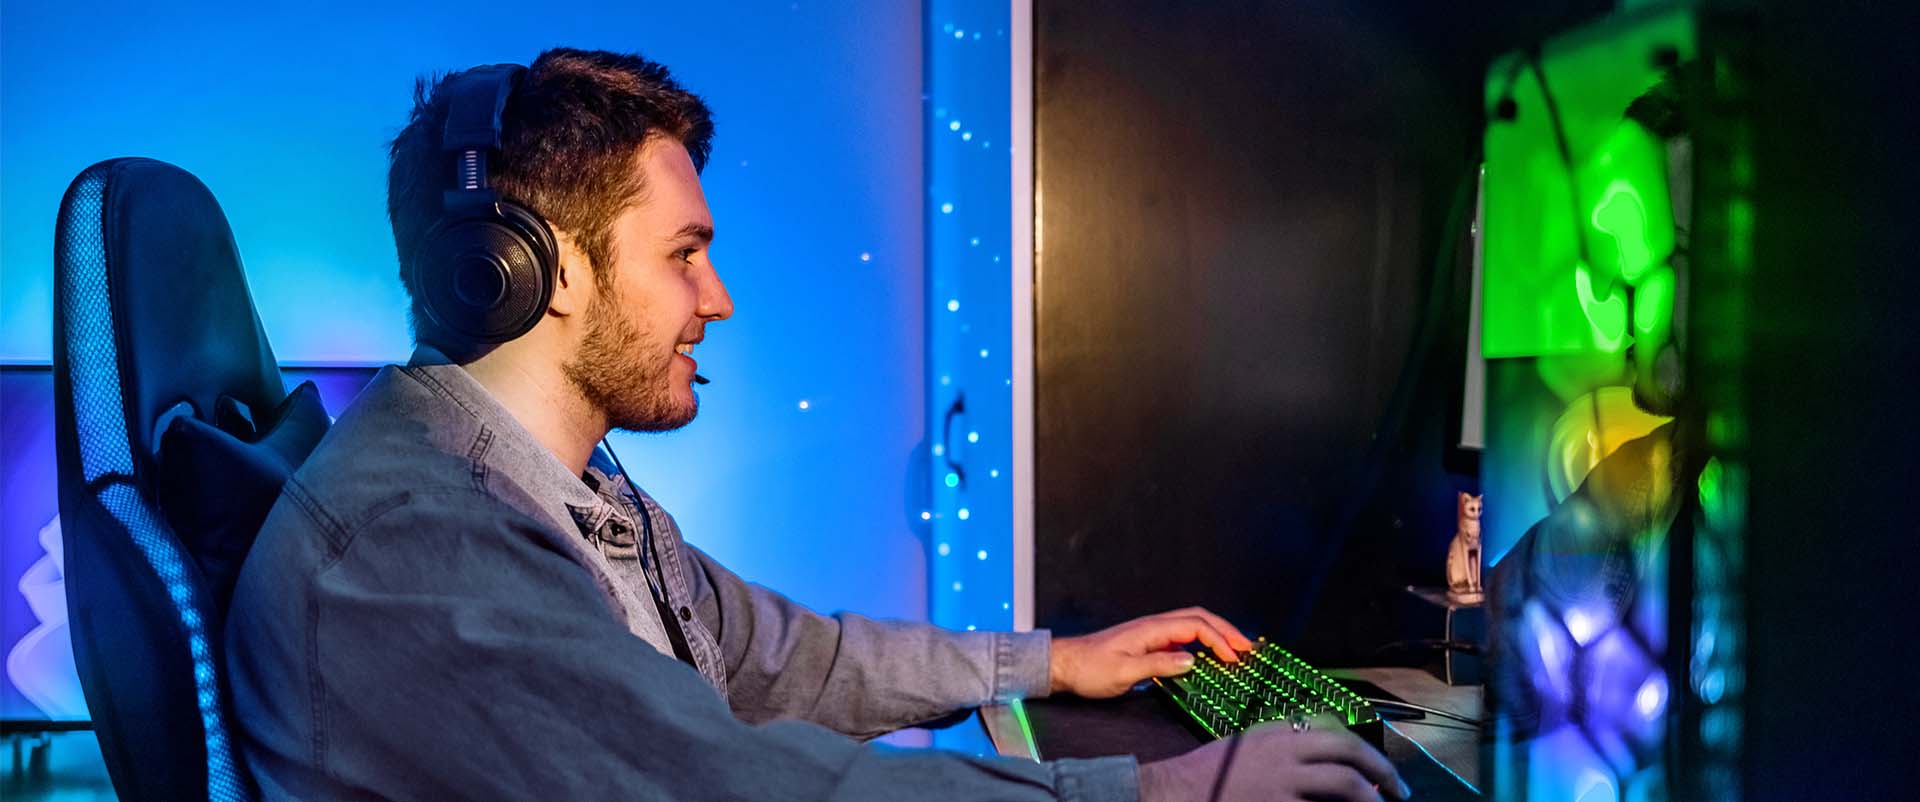 Gamer competing online over seamless fiber internet connection 